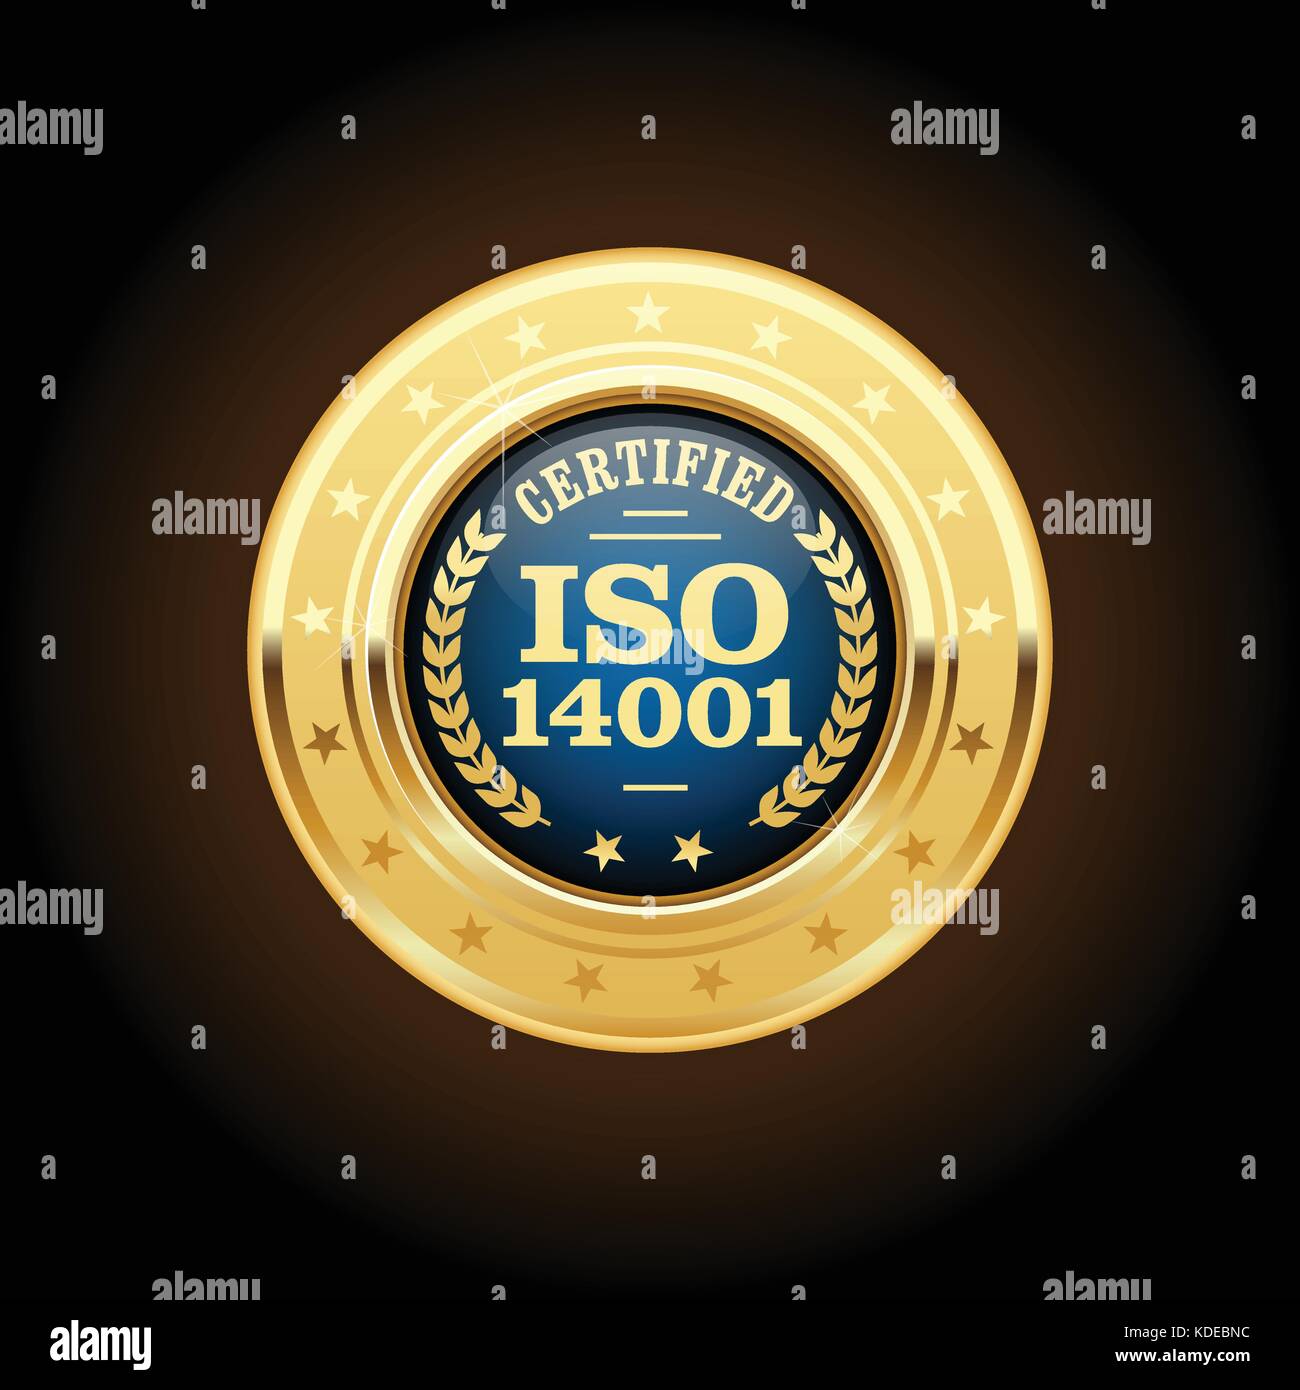 Iso 14001 zertifiziert Medaille - Qualität Standard goldenen Insignien Stock Vektor